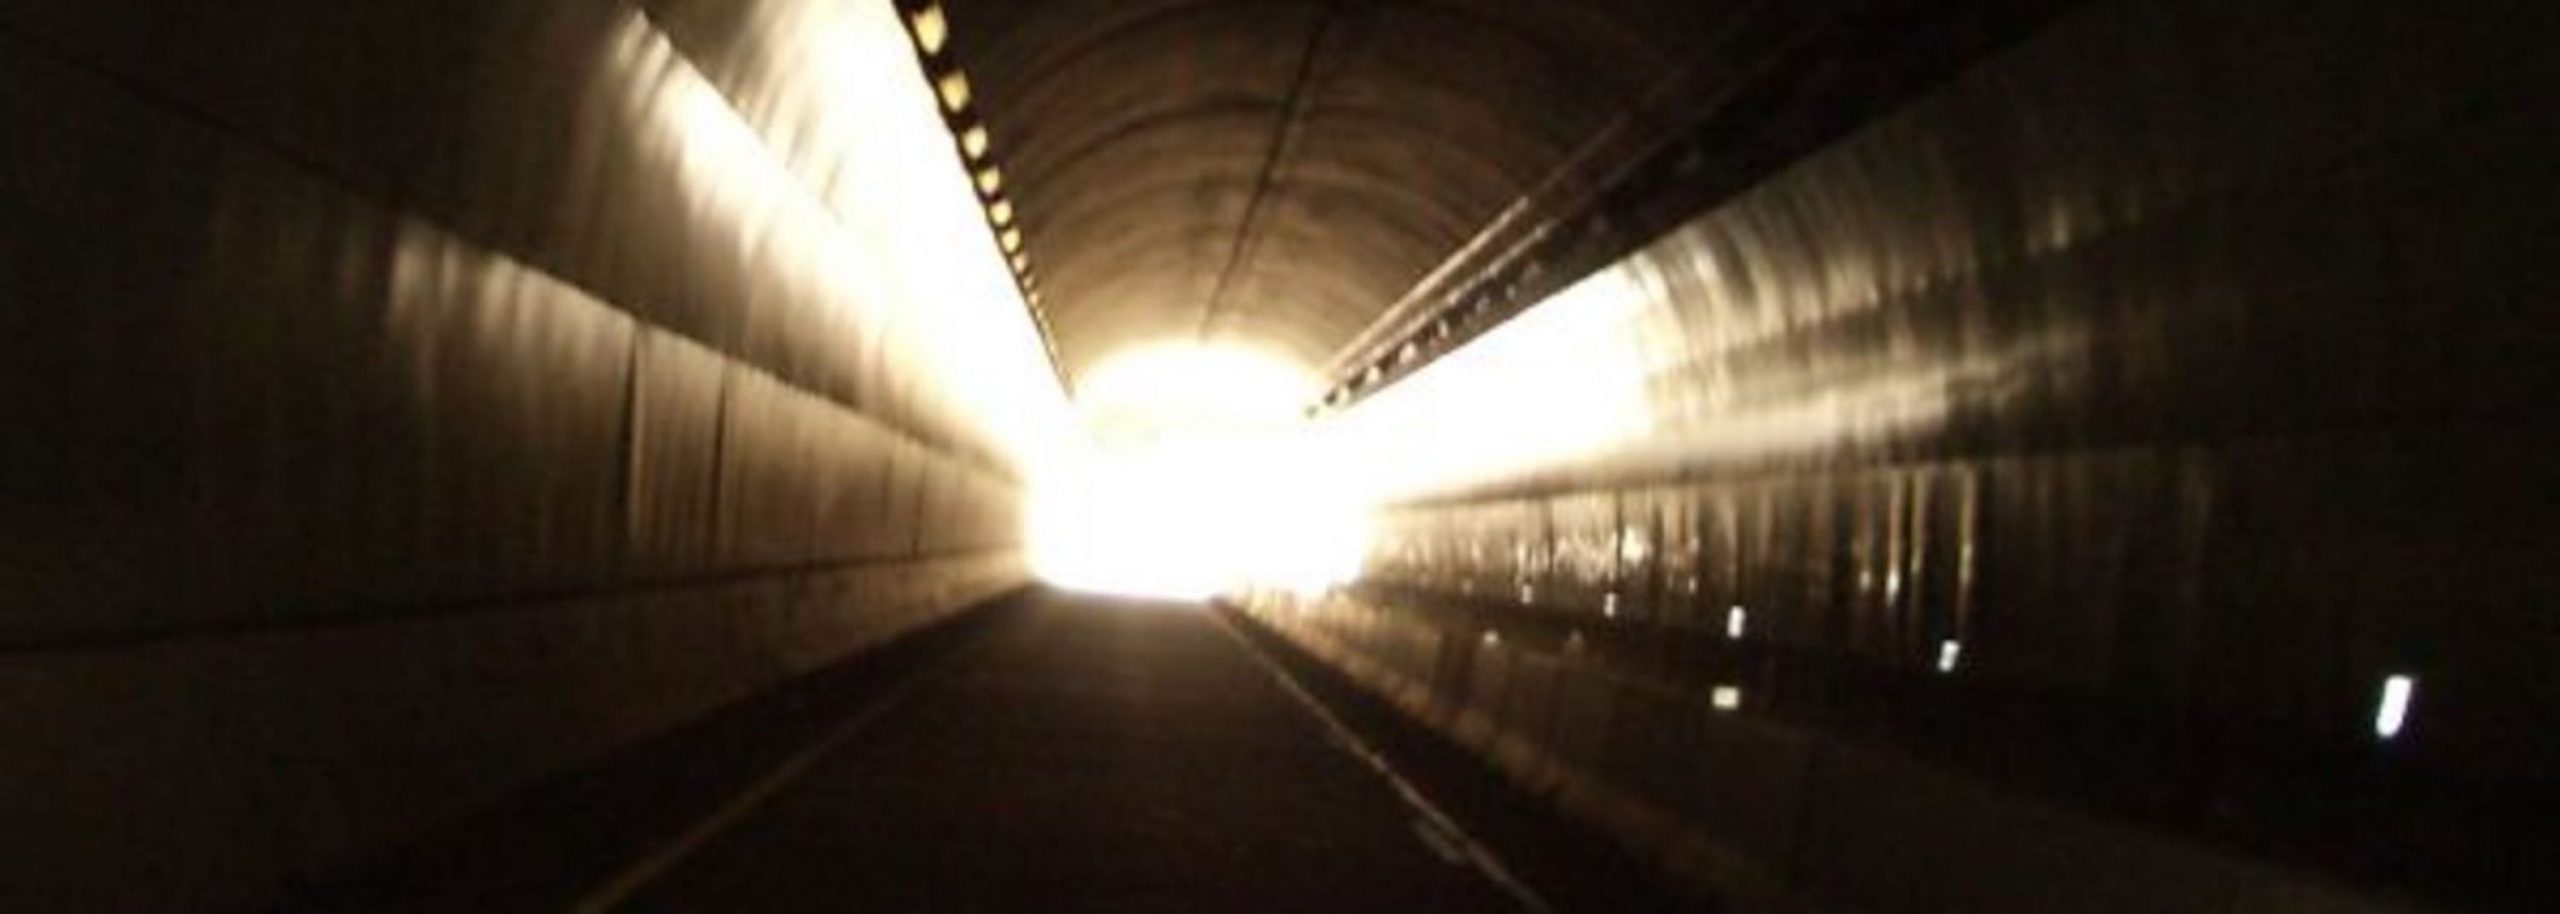 tunnel2-1680x600-1